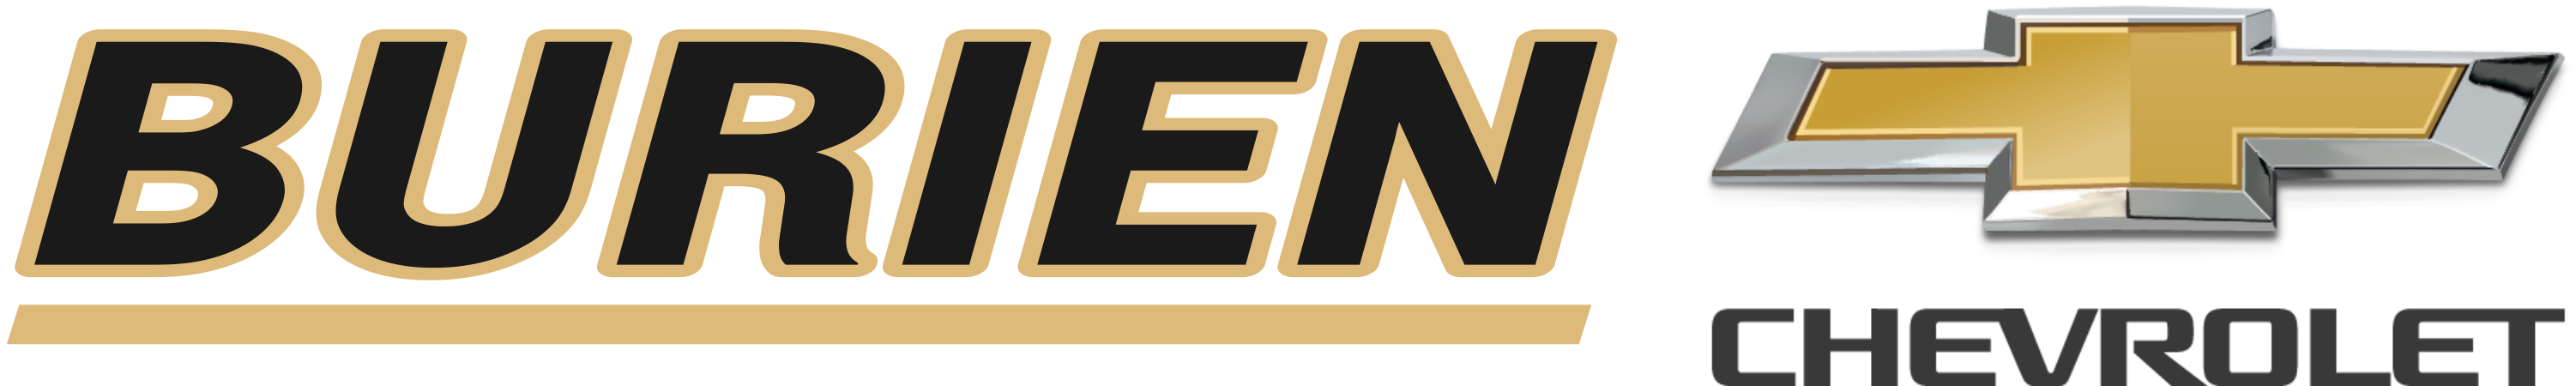 Burien Chevrolet Logo